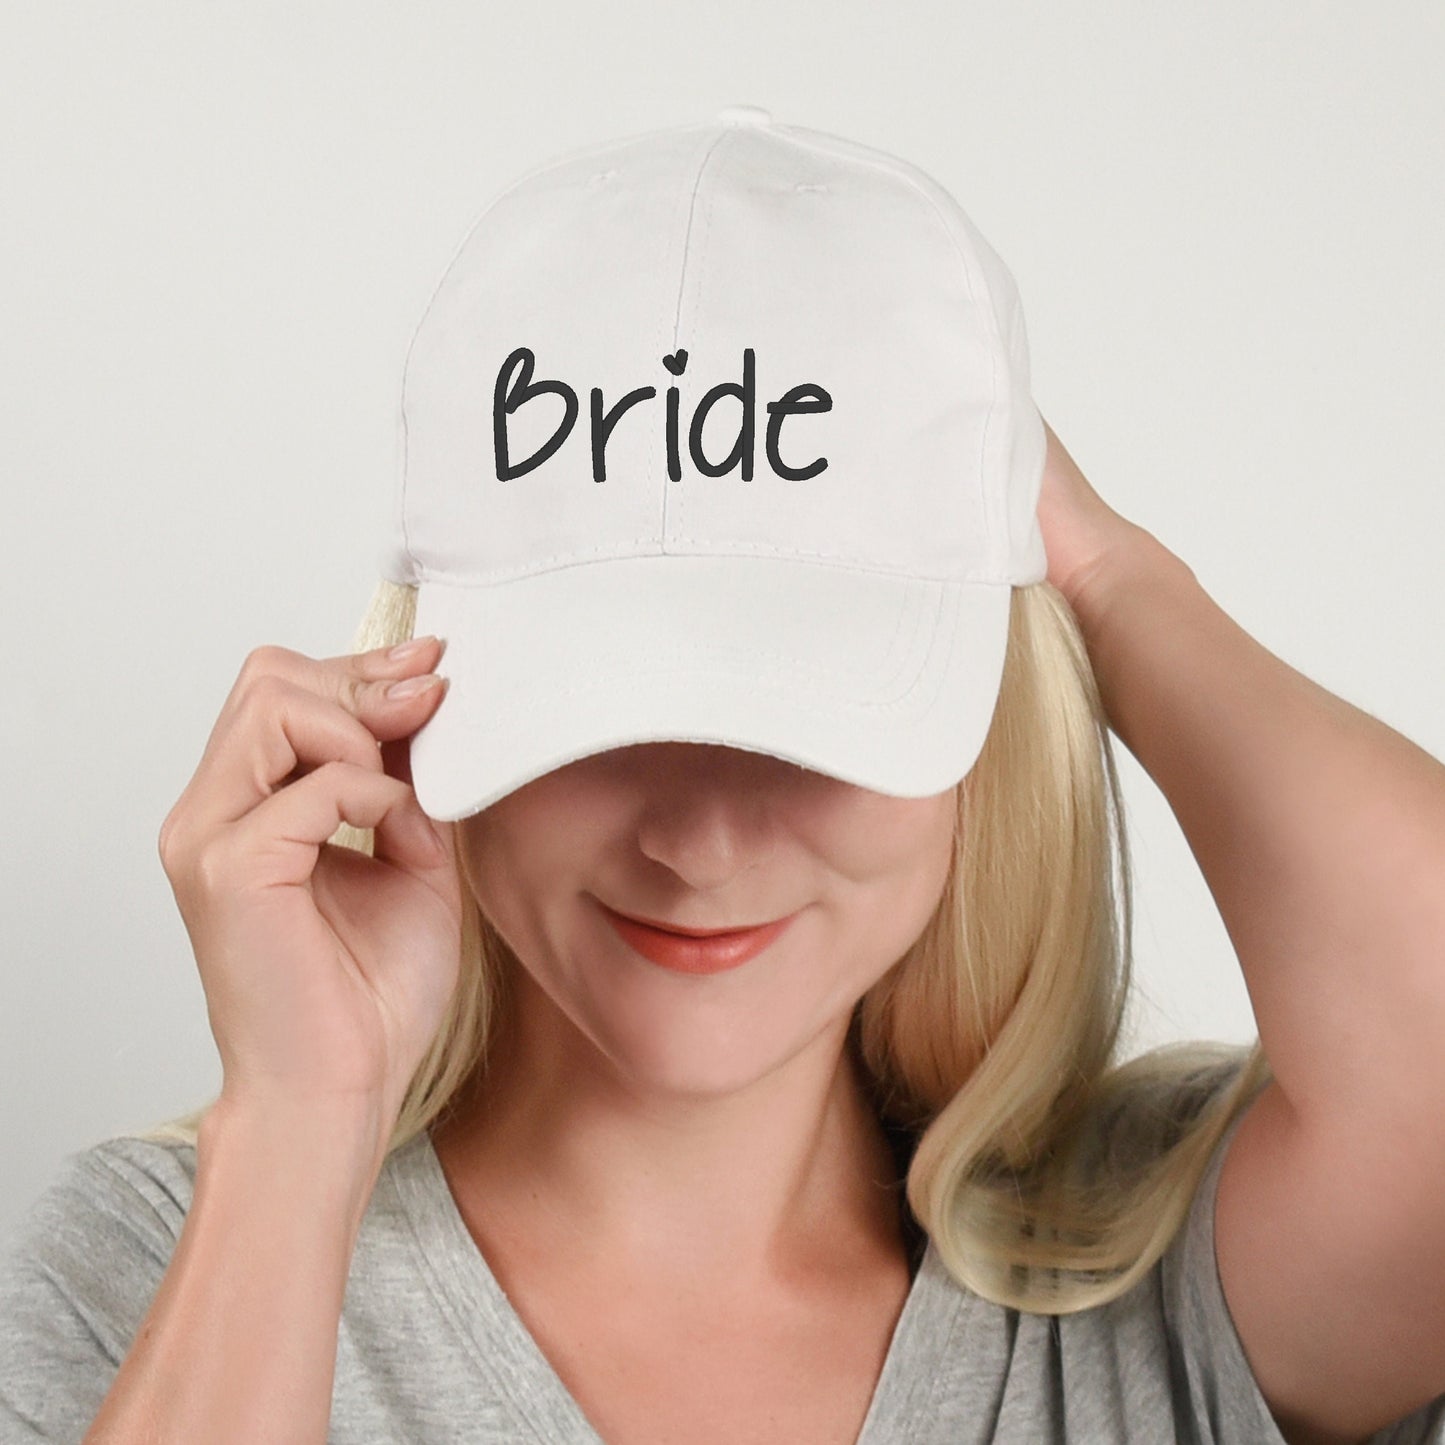 Personalize bride baseball cap Custom wedding party hat with monogram Bride-to-be gift idea Bride and bridesmaid matching cap Wedding attire